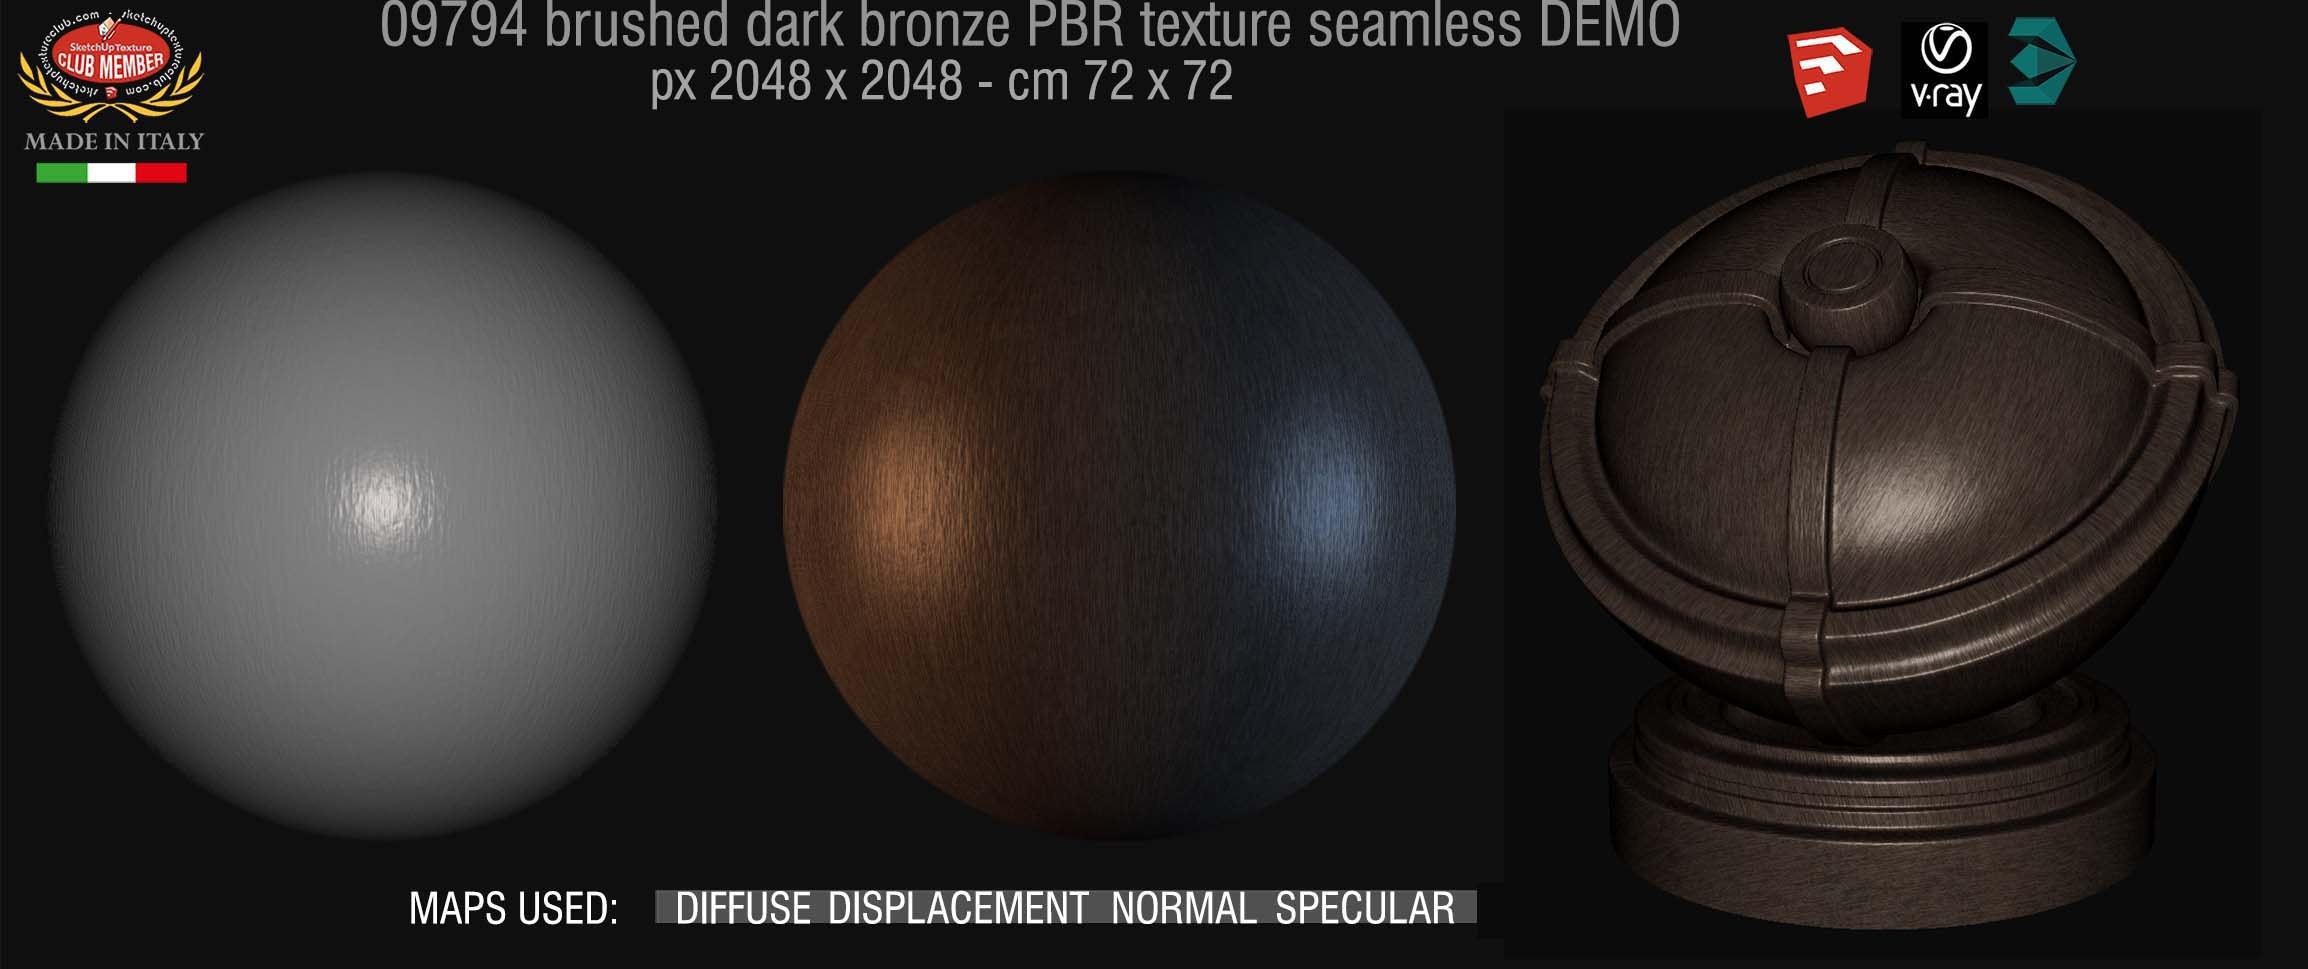 09794 Brushed dark bronze metal surface PBR texture seamless DEMO